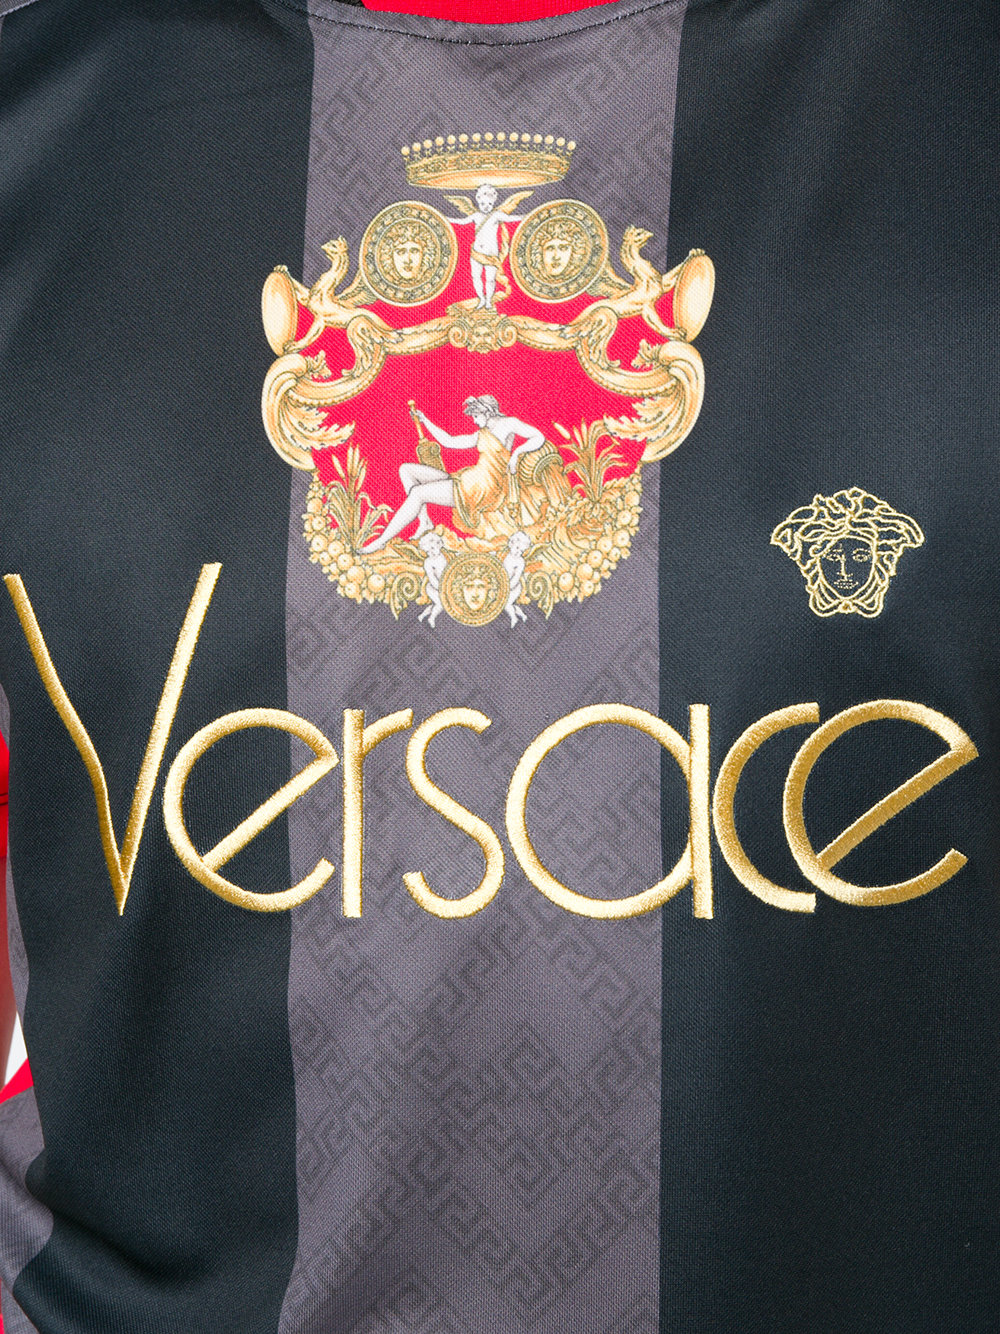 Fobia Pío Los Alpes $824 USD - Second Versace Football Kit Released - Footy Headlines